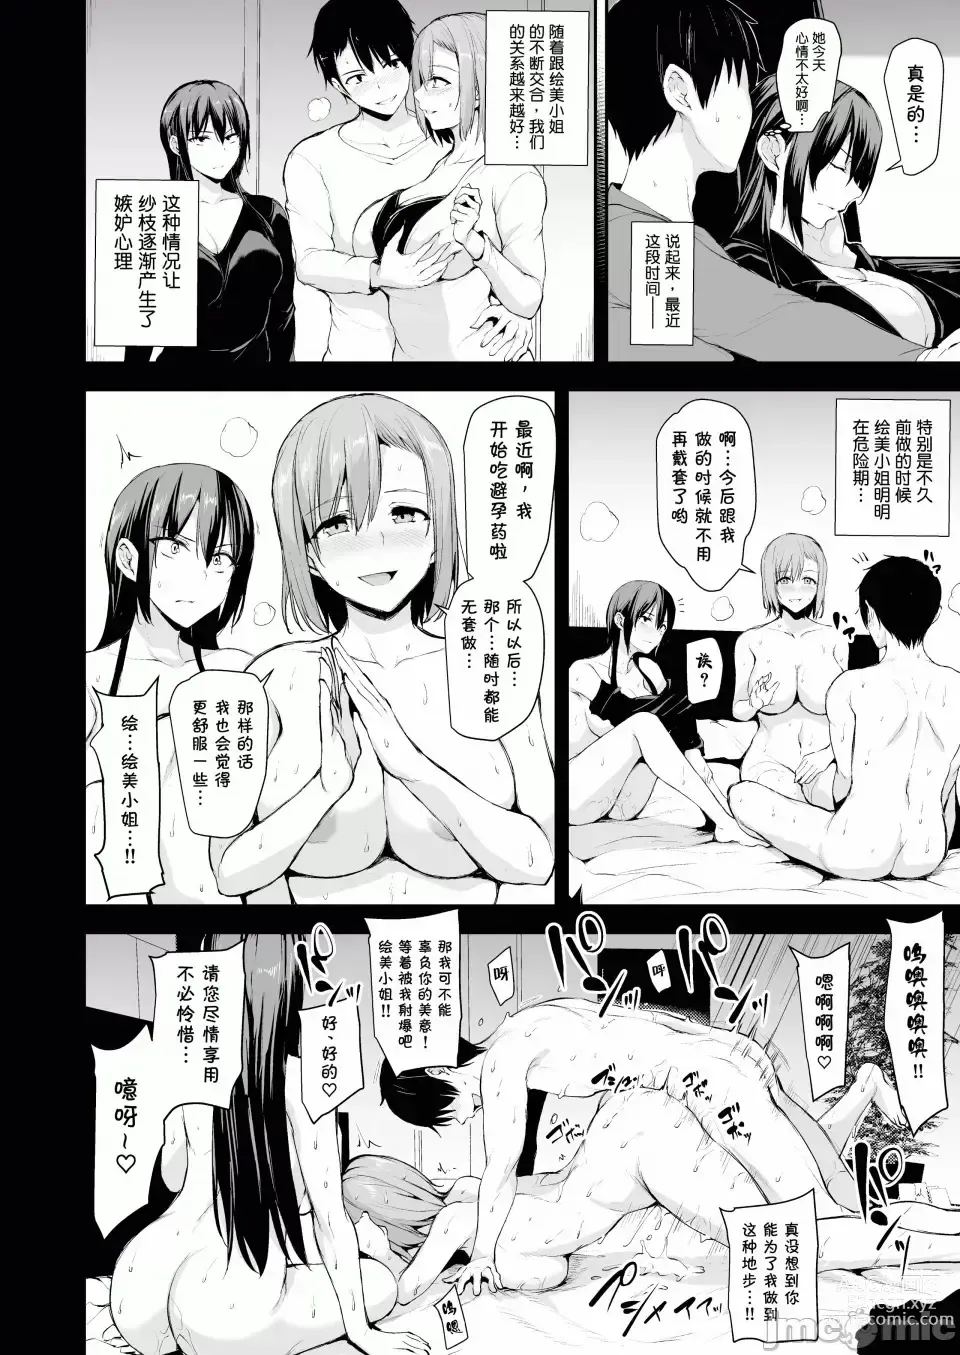 Page 5 of doujinshi 巨乳が2人いないと勃起しない勃起しない夫のために友達を連れてきた妻2